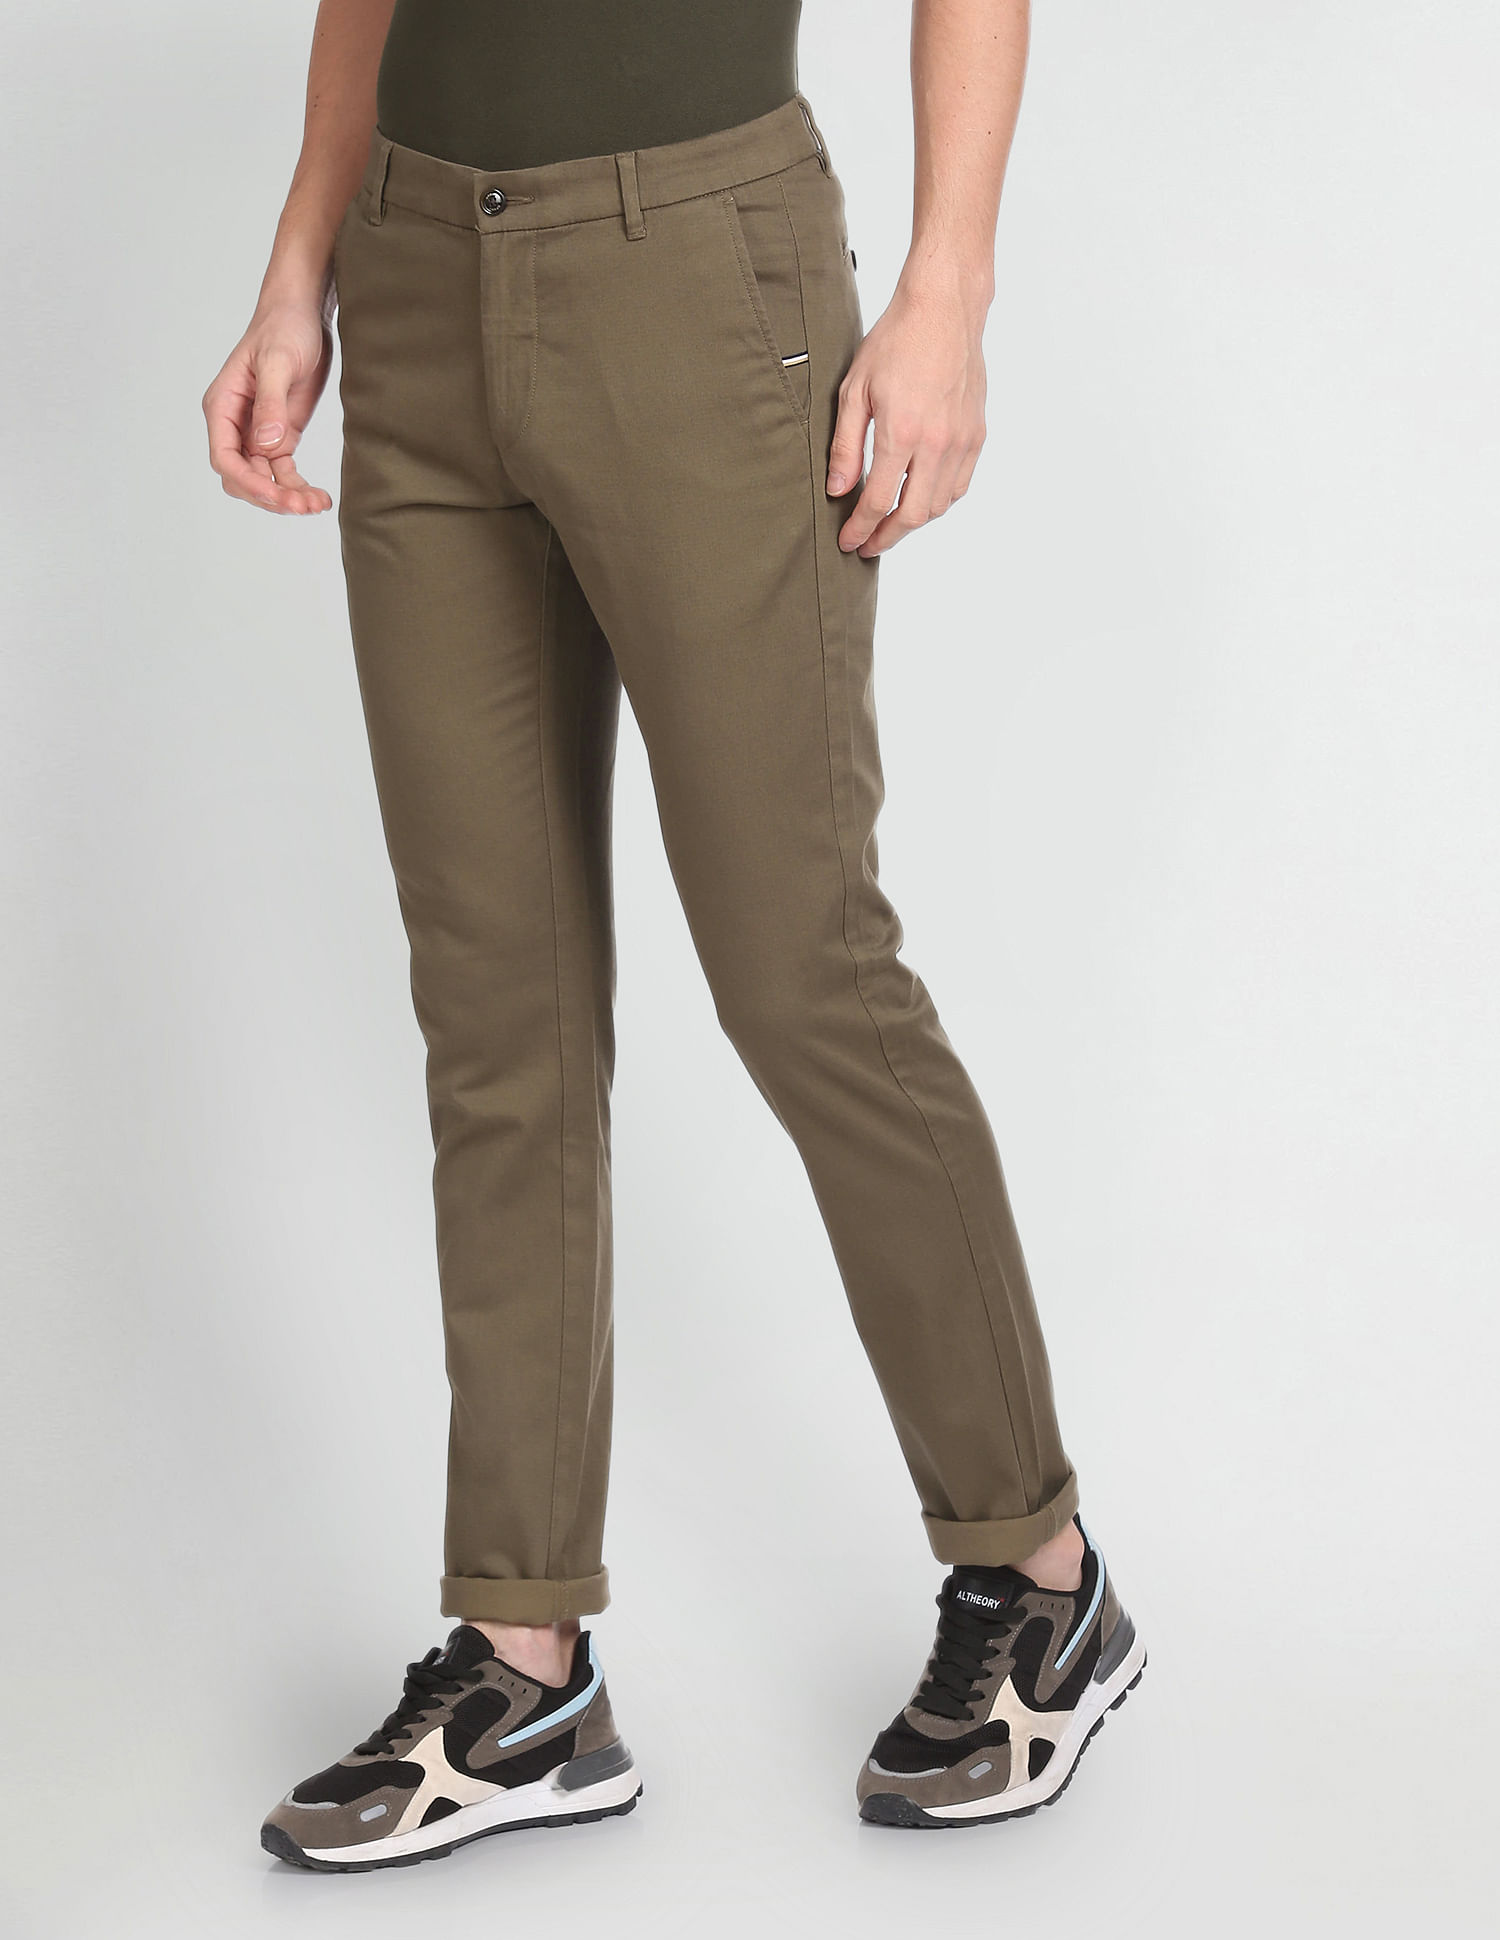 Buy Arrow Heathered Formal Trousers - NNNOW.com